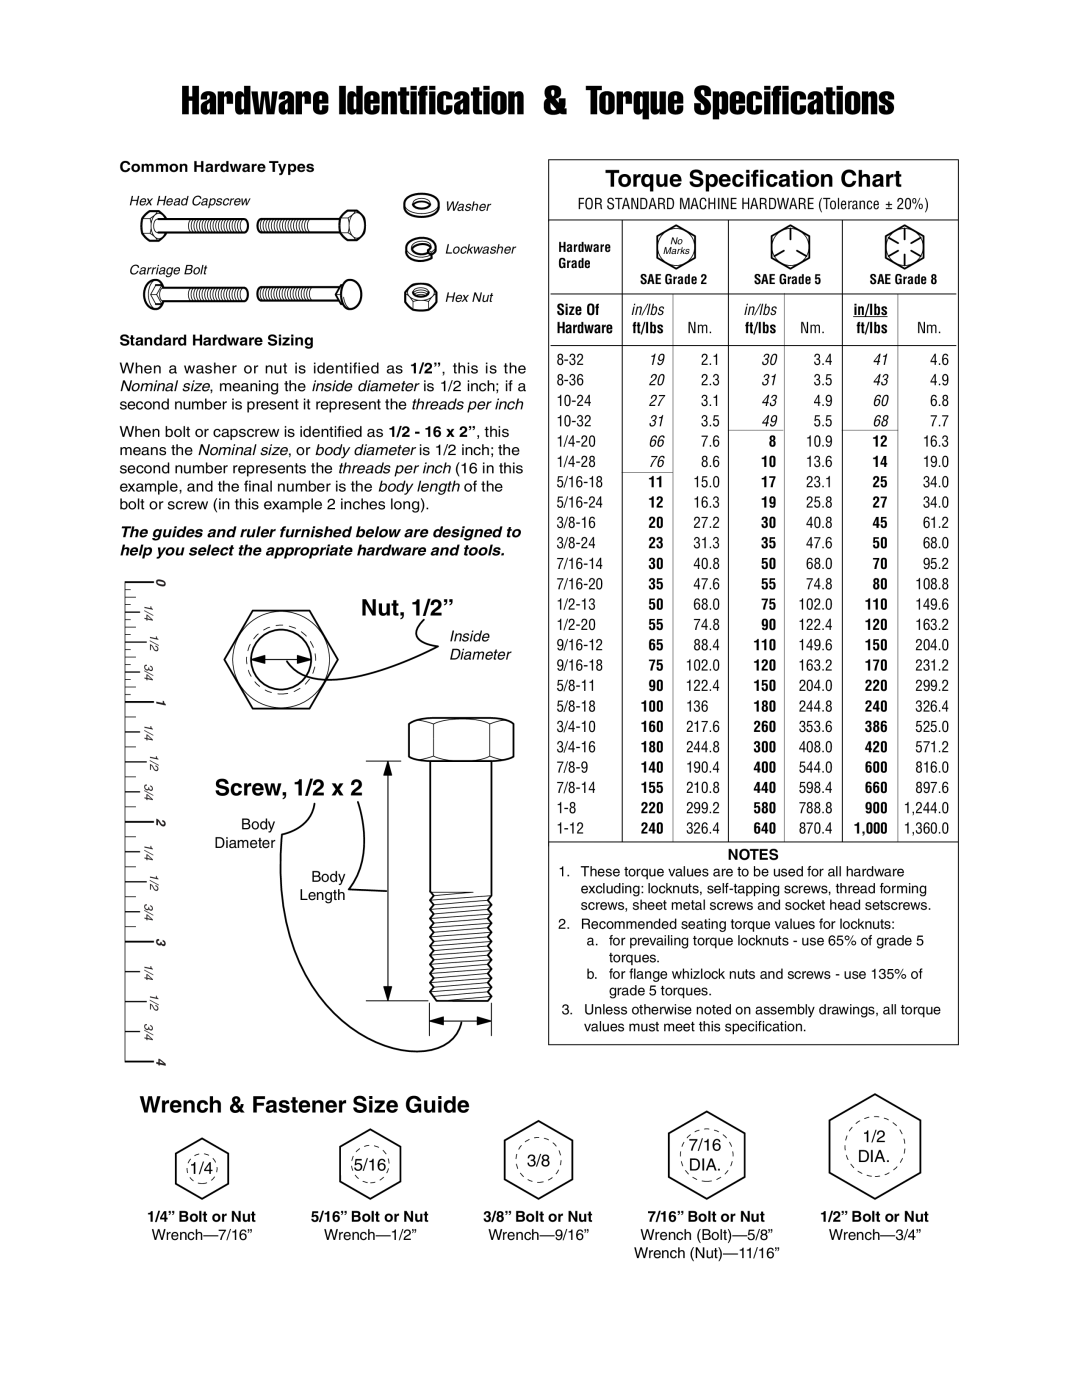 Simplicity 1694581 Hardware Identification & Torque Specifications, Torque Specification Chart, Nut, 1/2”, Screw, 1/2 